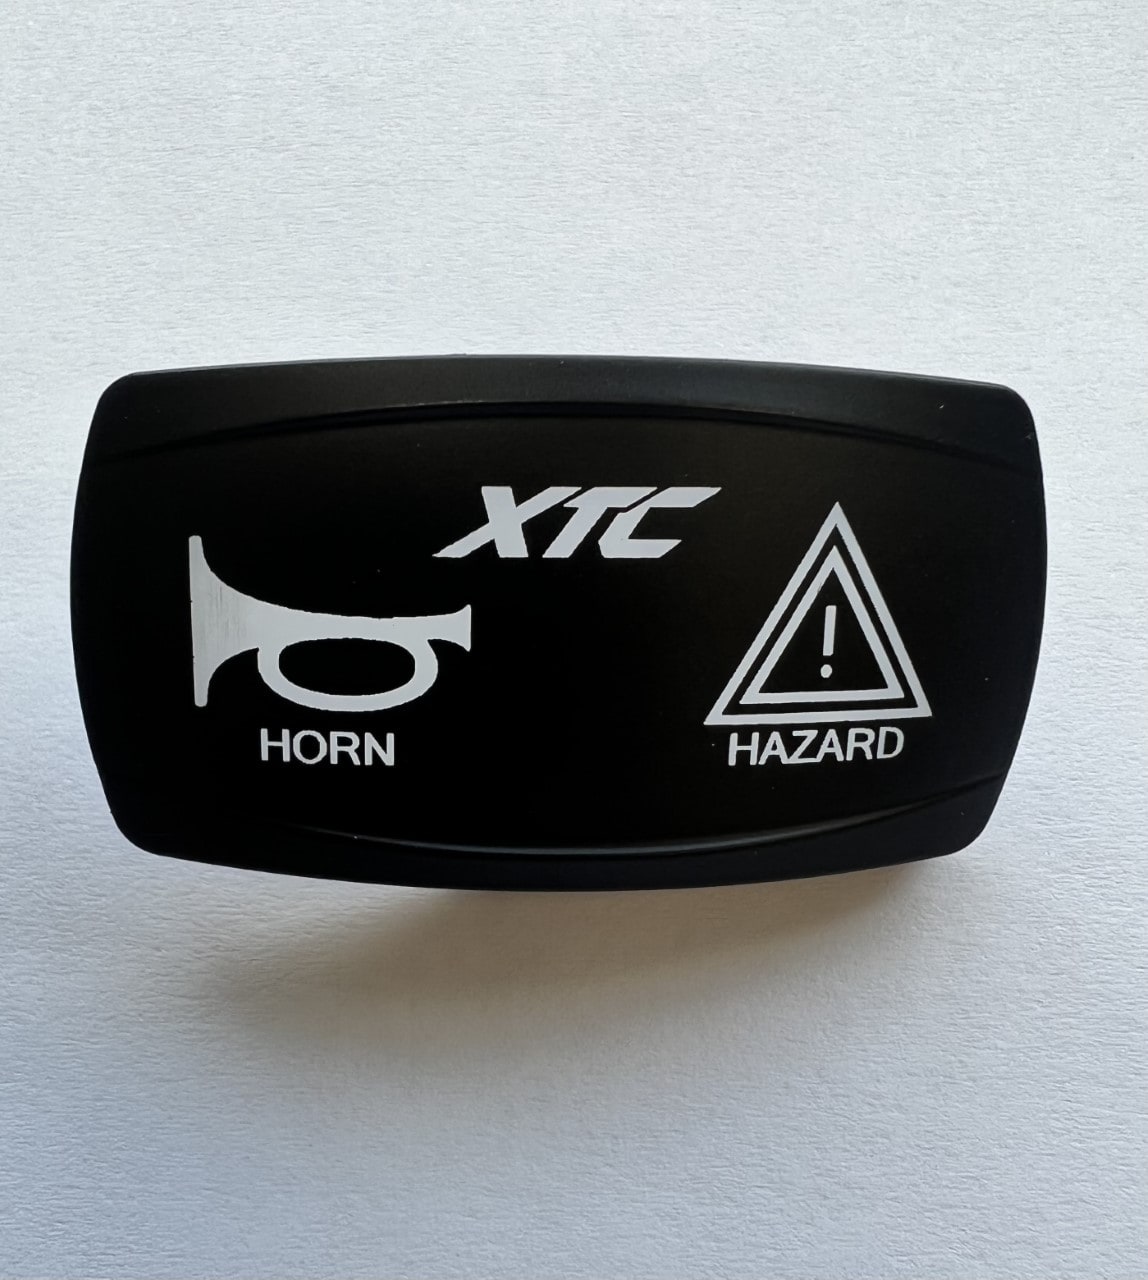 XTC Horizontal Hazard Horn Rocker Switch Cover